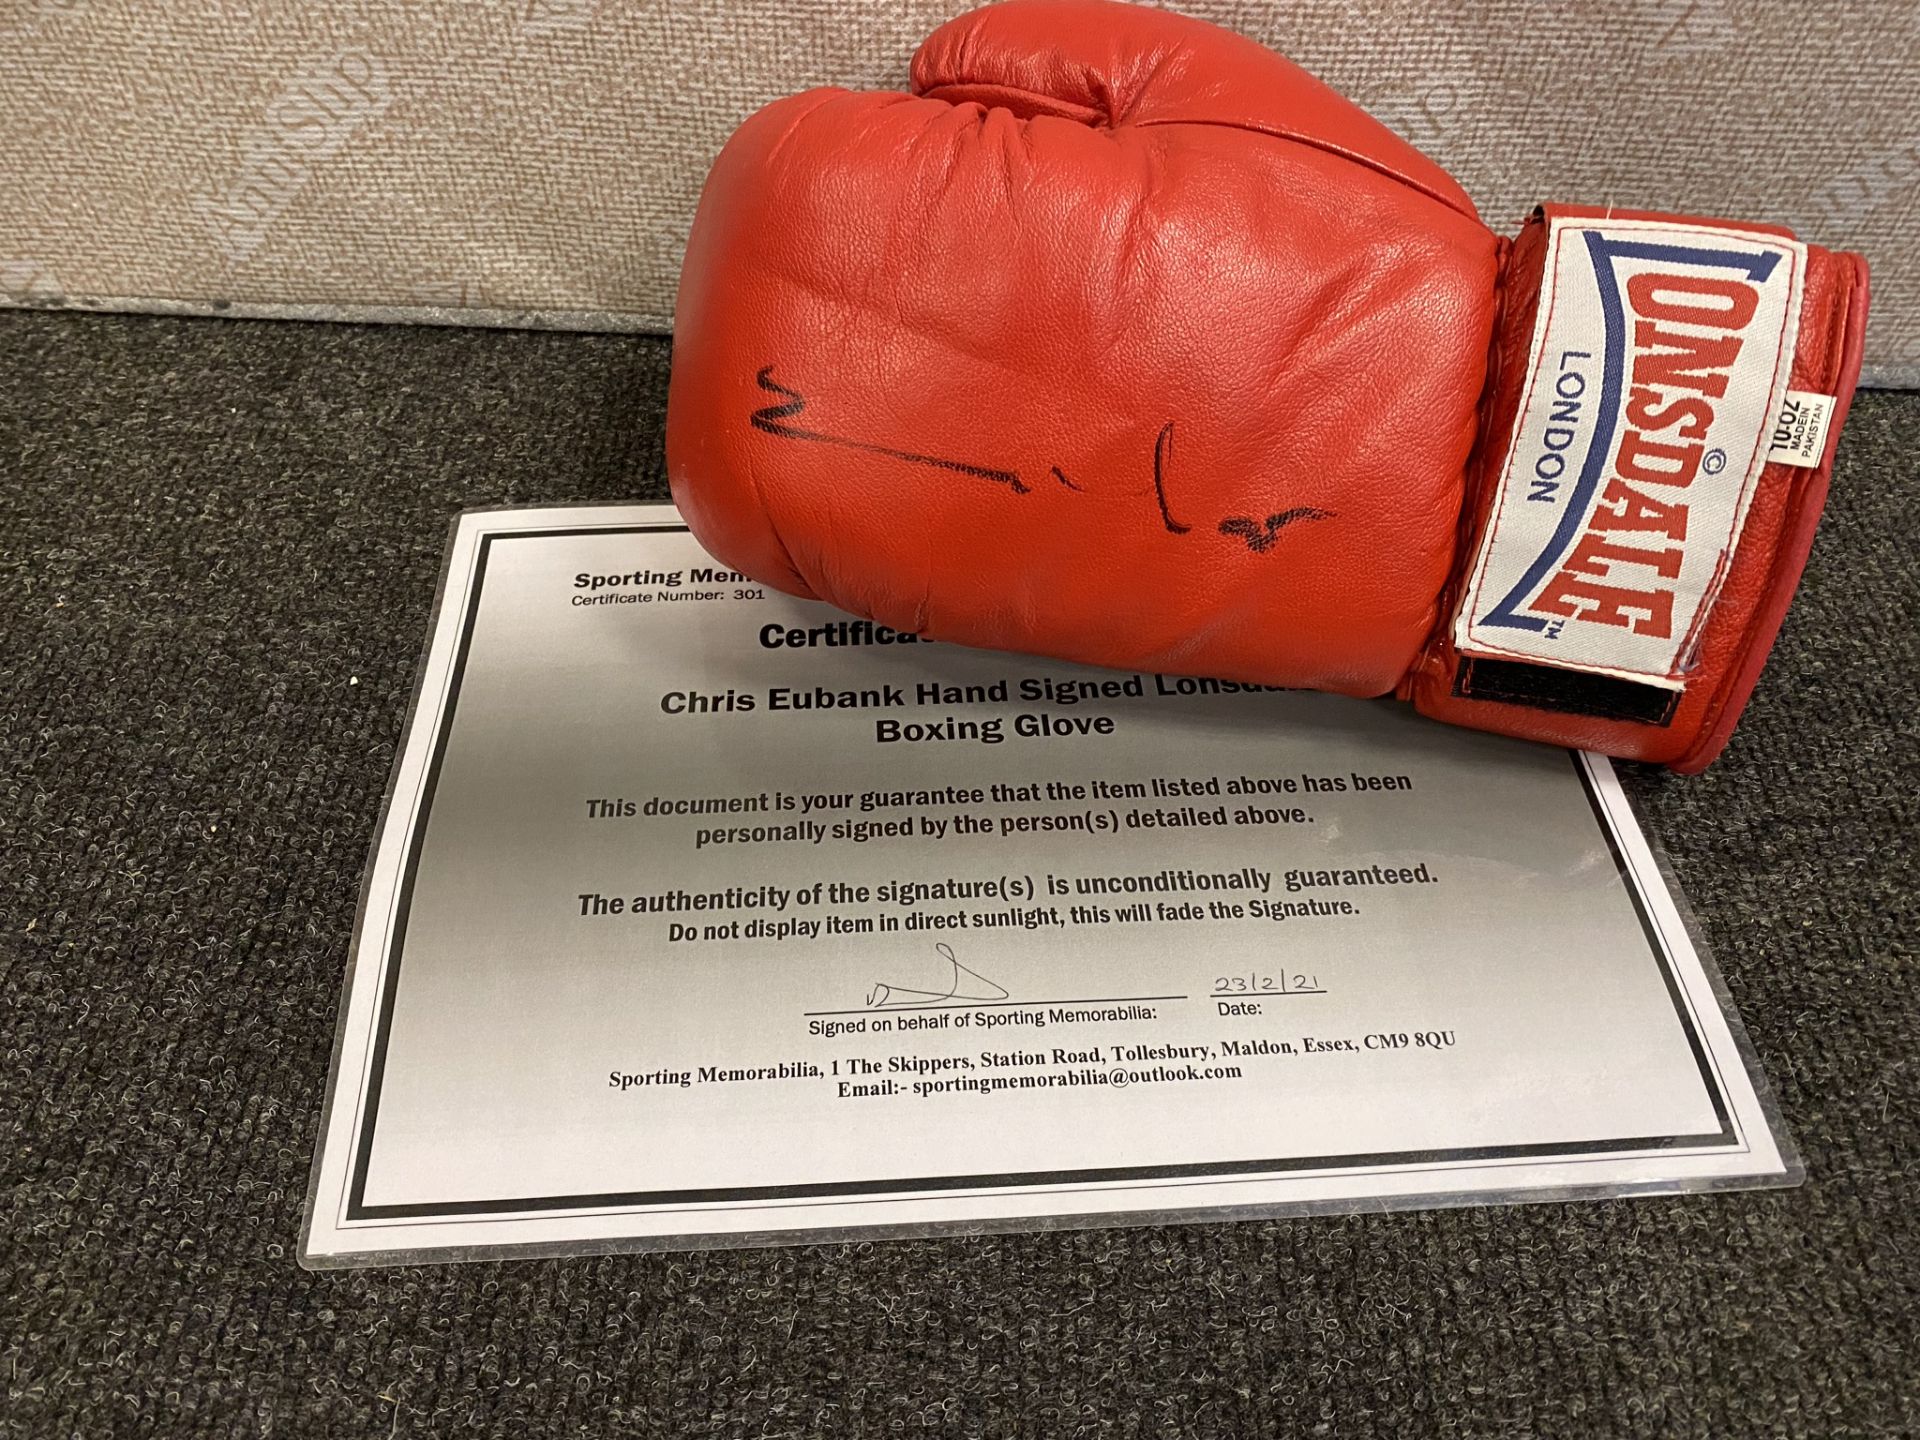 Chris Eubank Signed Boxing Glove - Image 2 of 2